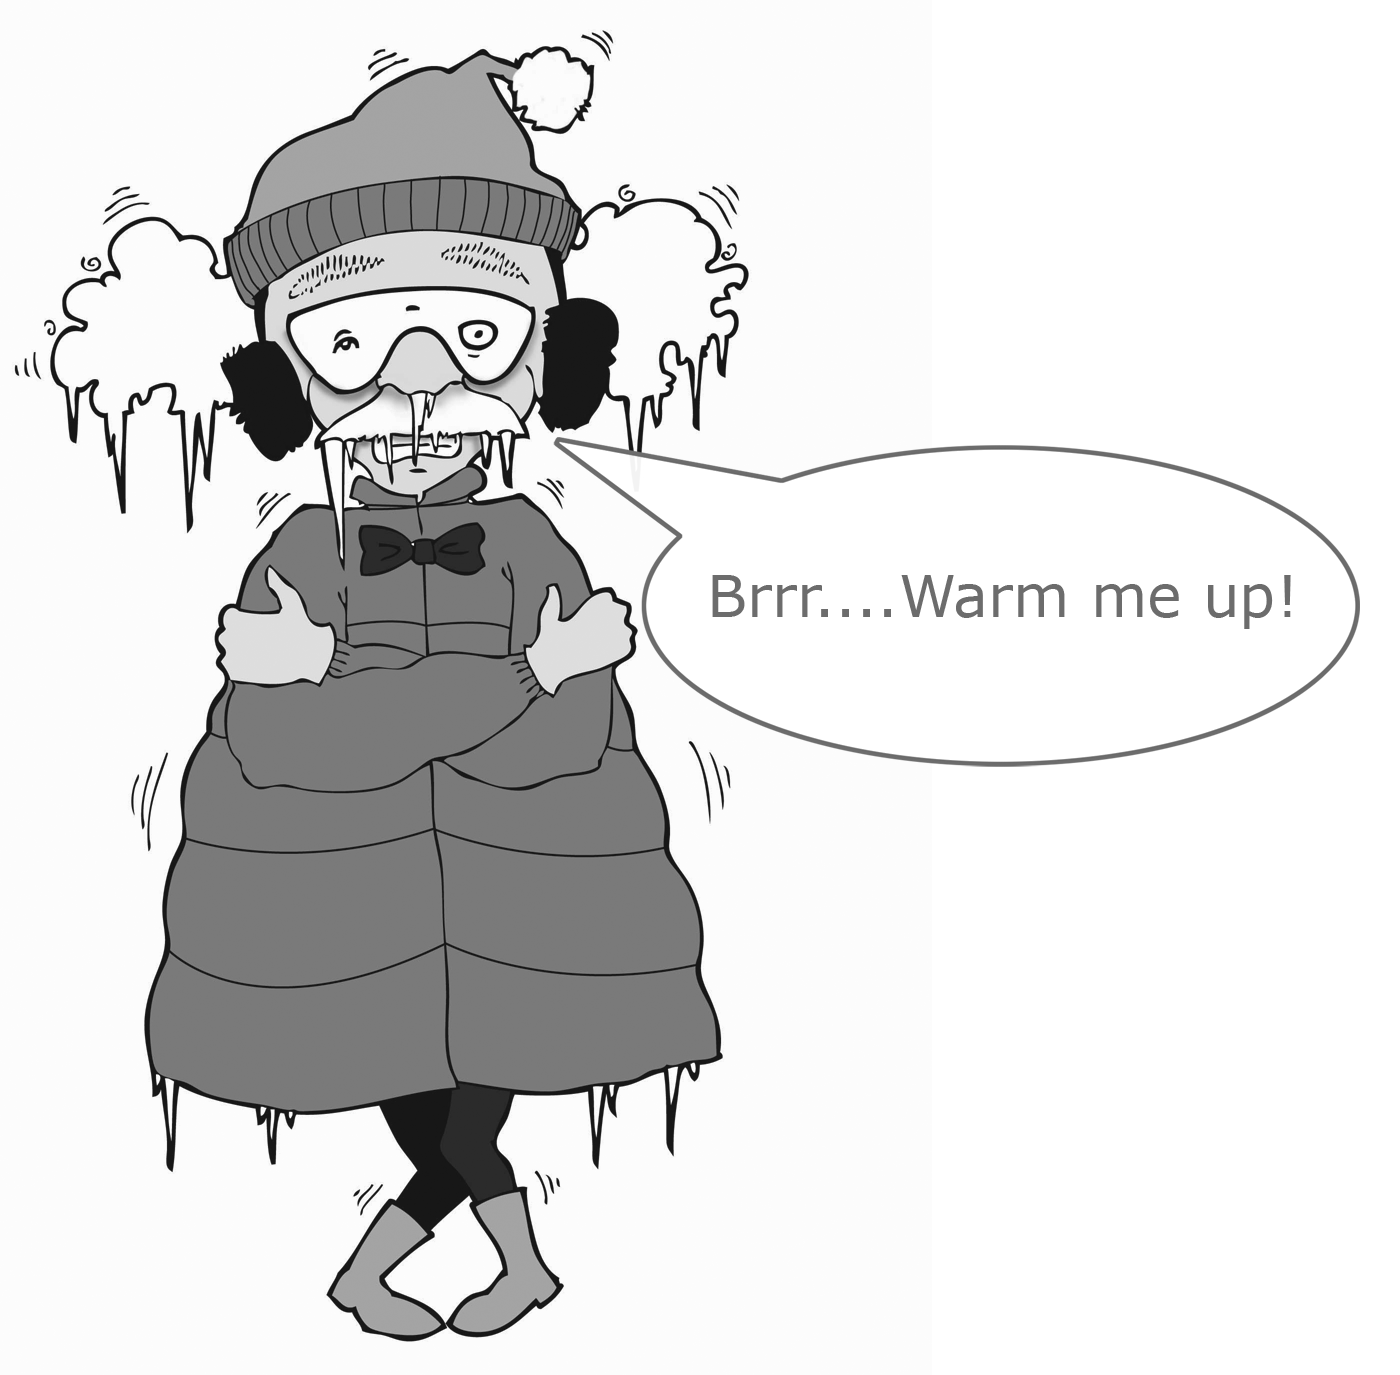 Dr Shock Says "BRR Warm me up!!!"